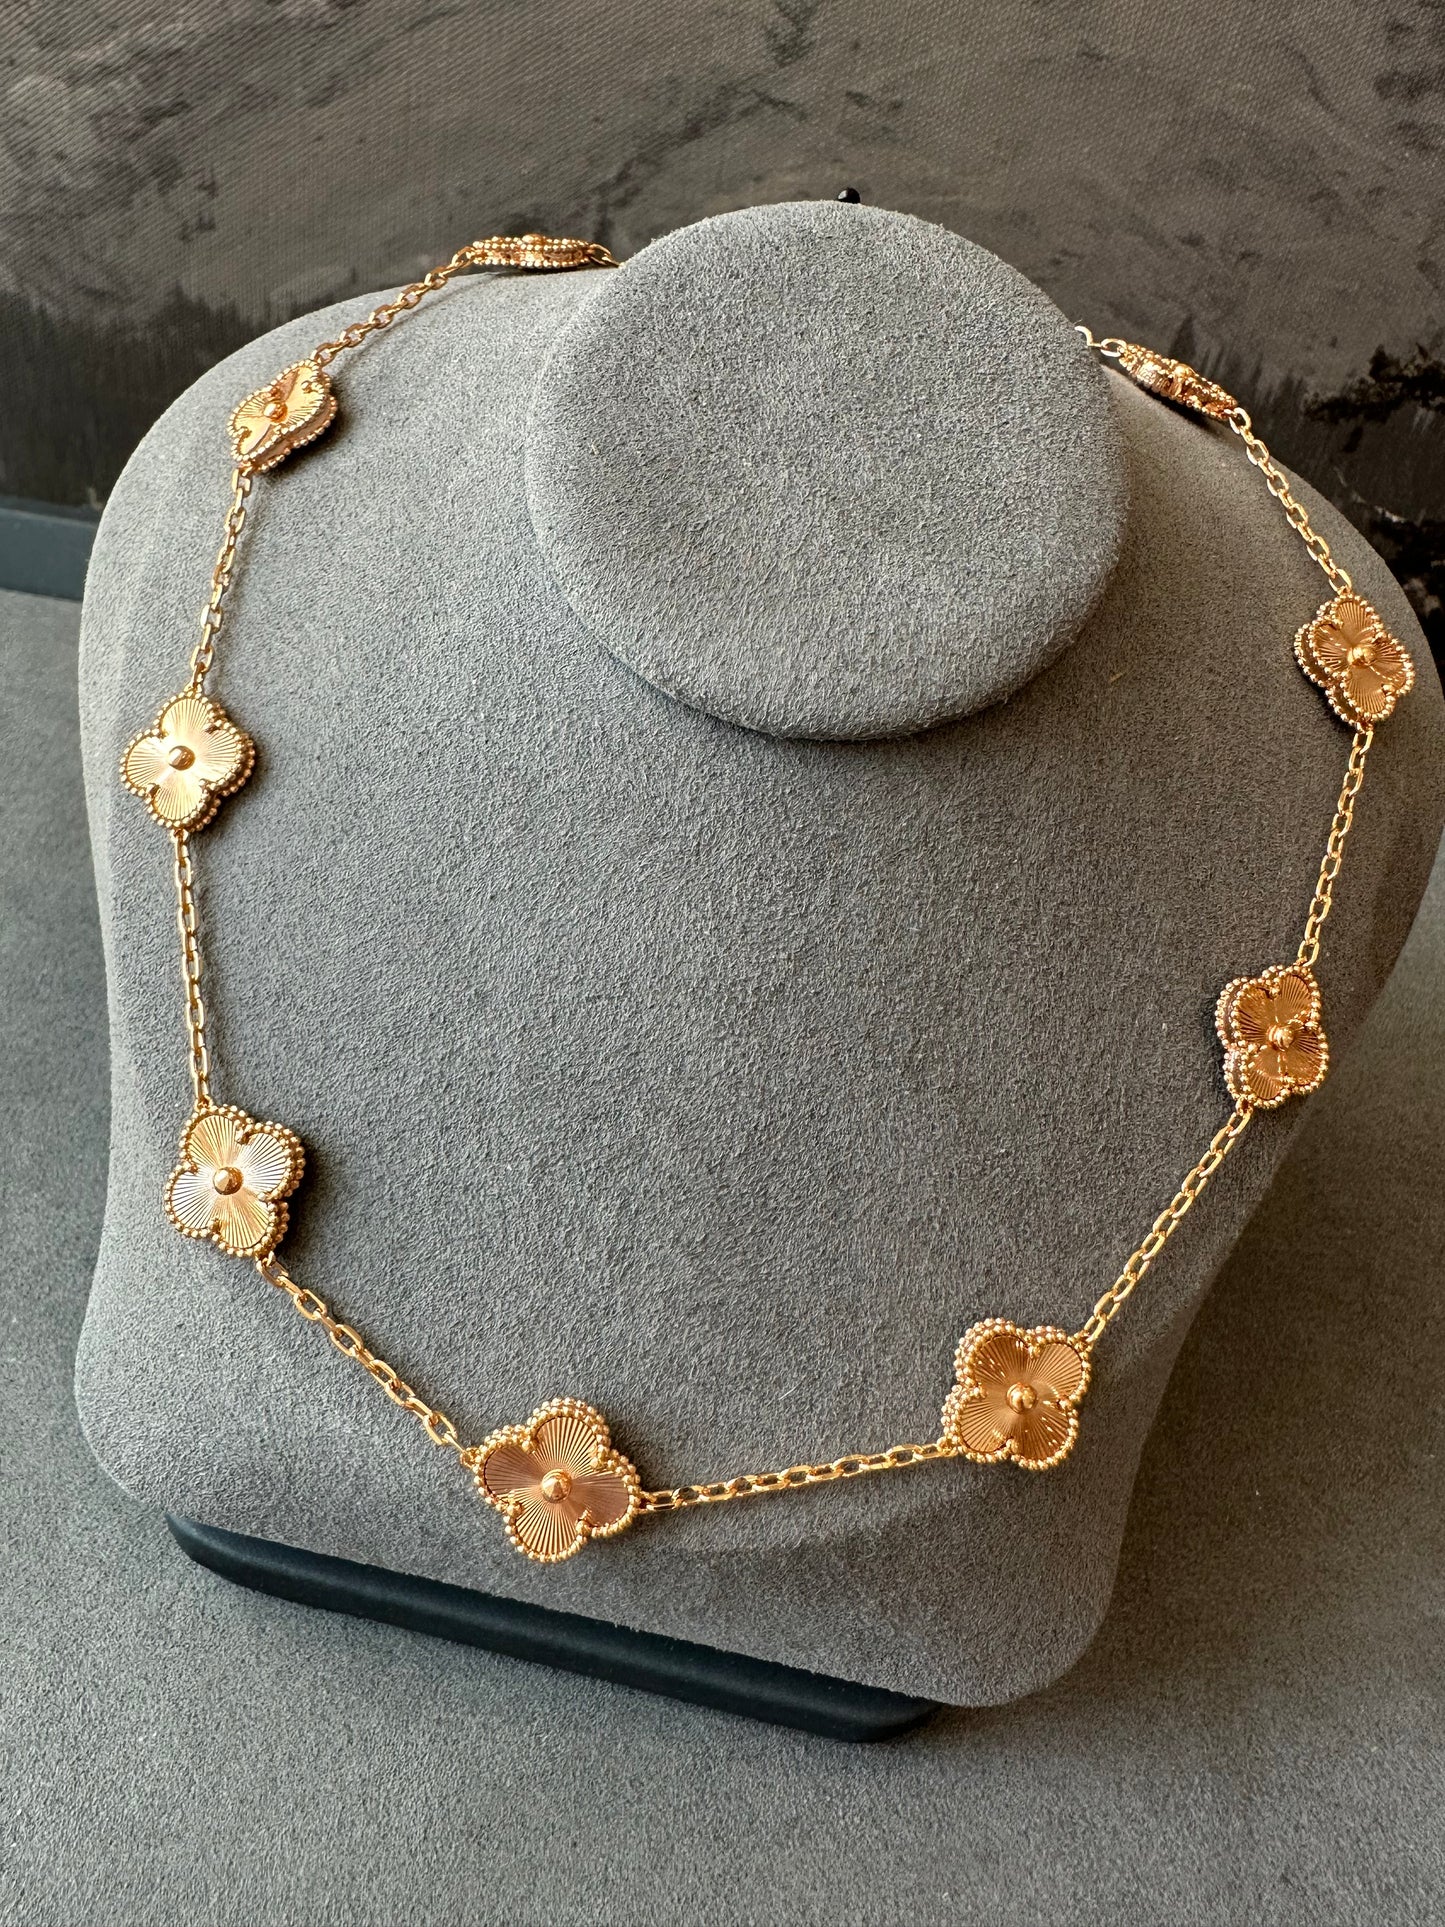 10 motif Guilliche clover necklace 925 silver 18k rosegold plated 42 cm long clover size 15mm - ParadiseKissCo